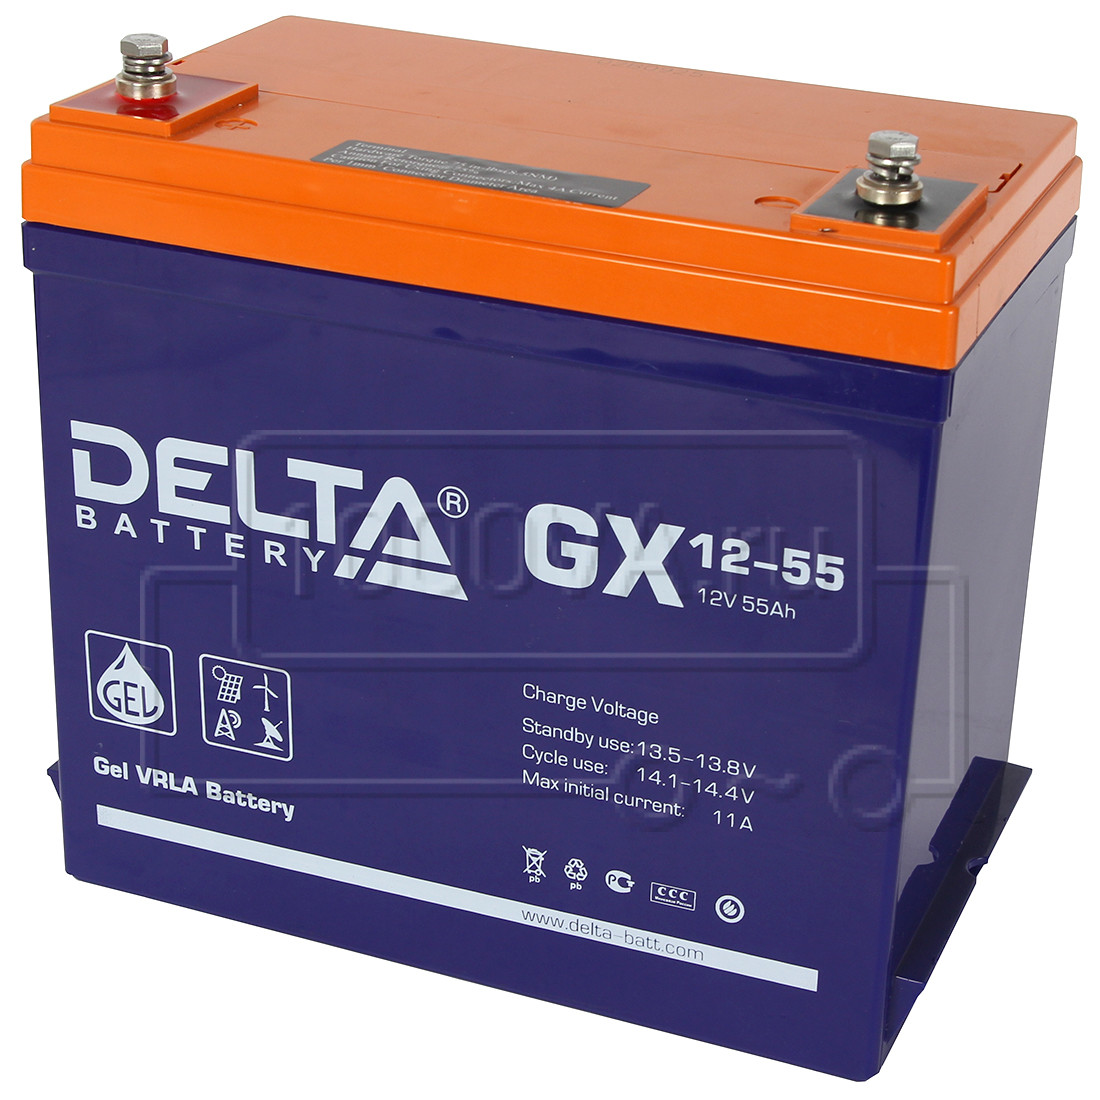 DELTA GX 12-55